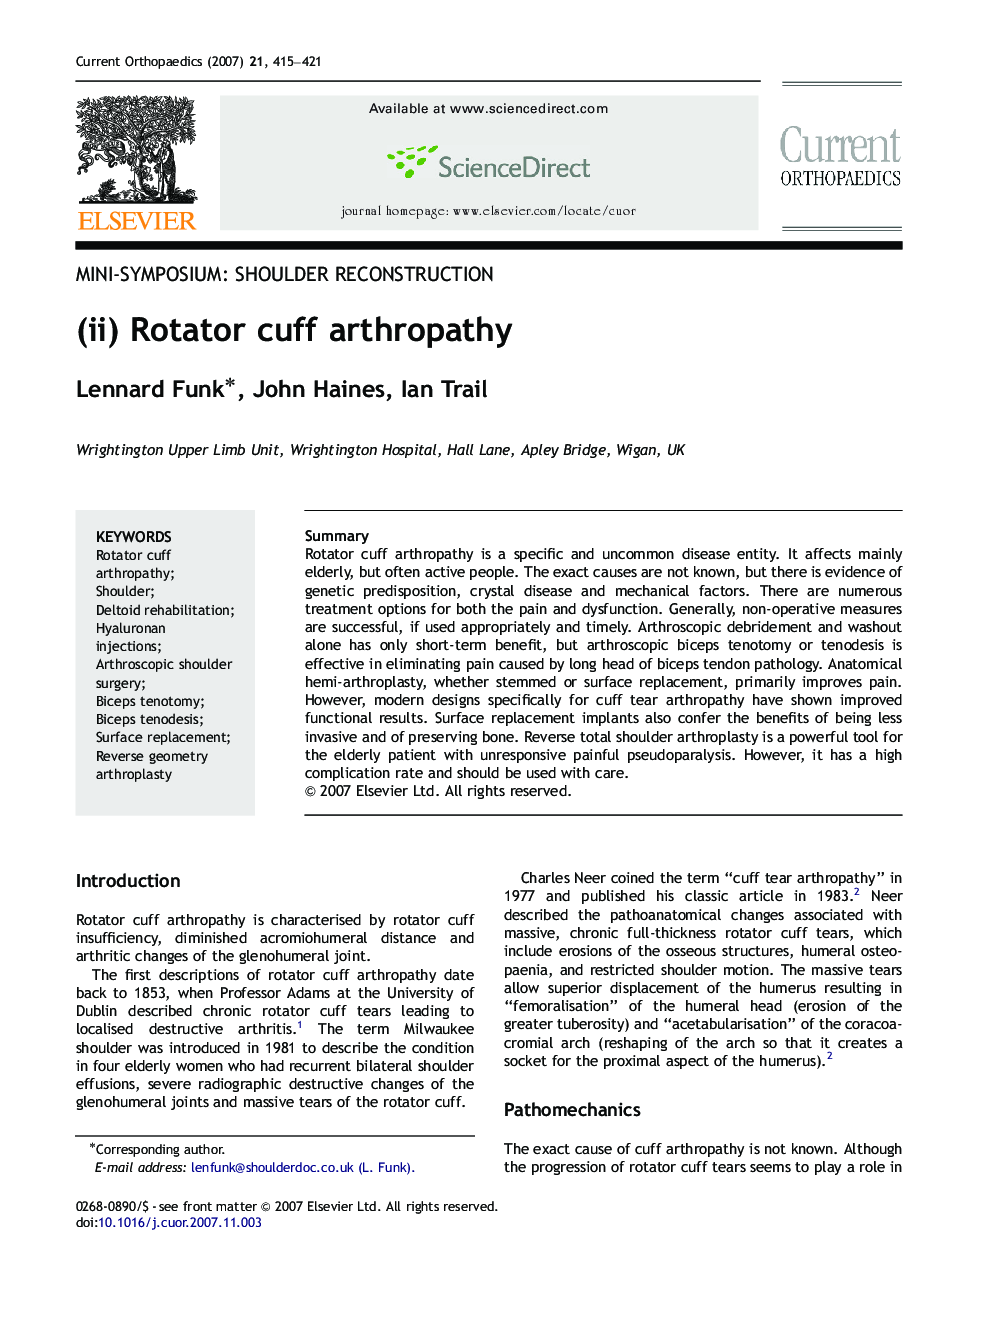 (ii) Rotator cuff arthropathy